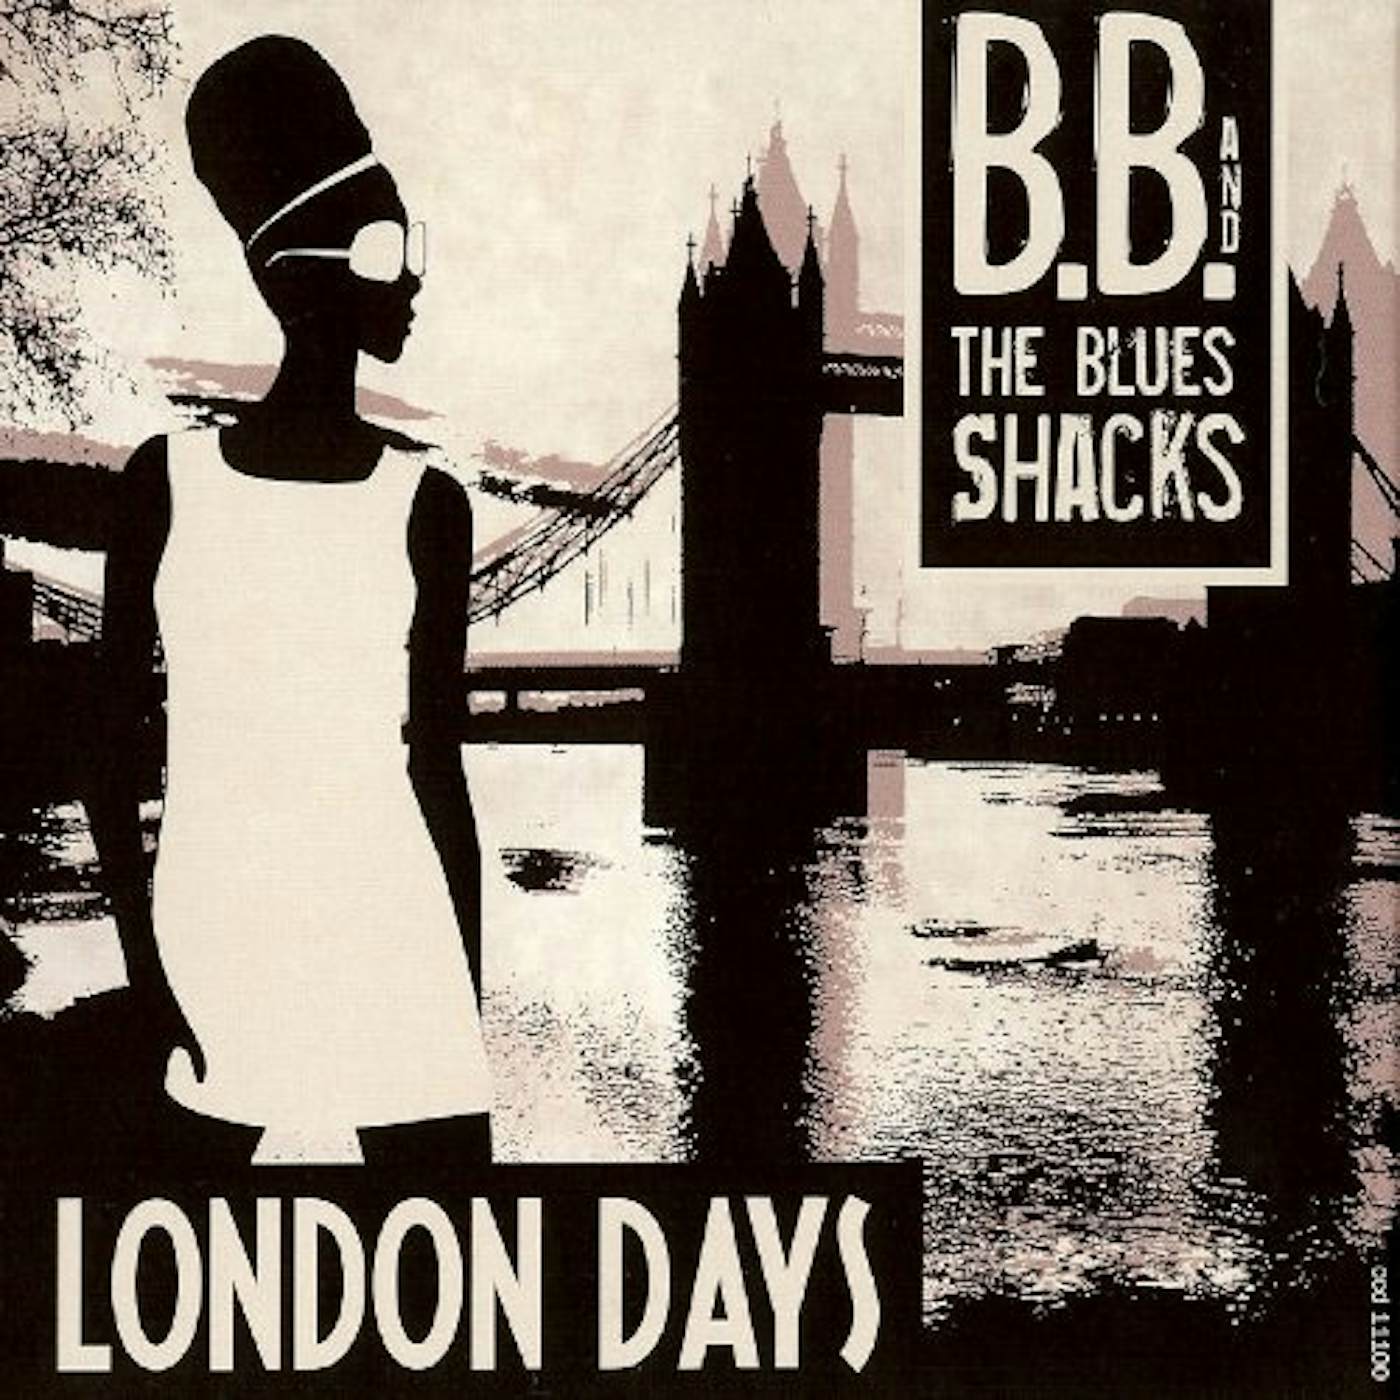 B.B. & The Blues Shacks London Days Vinyl Record